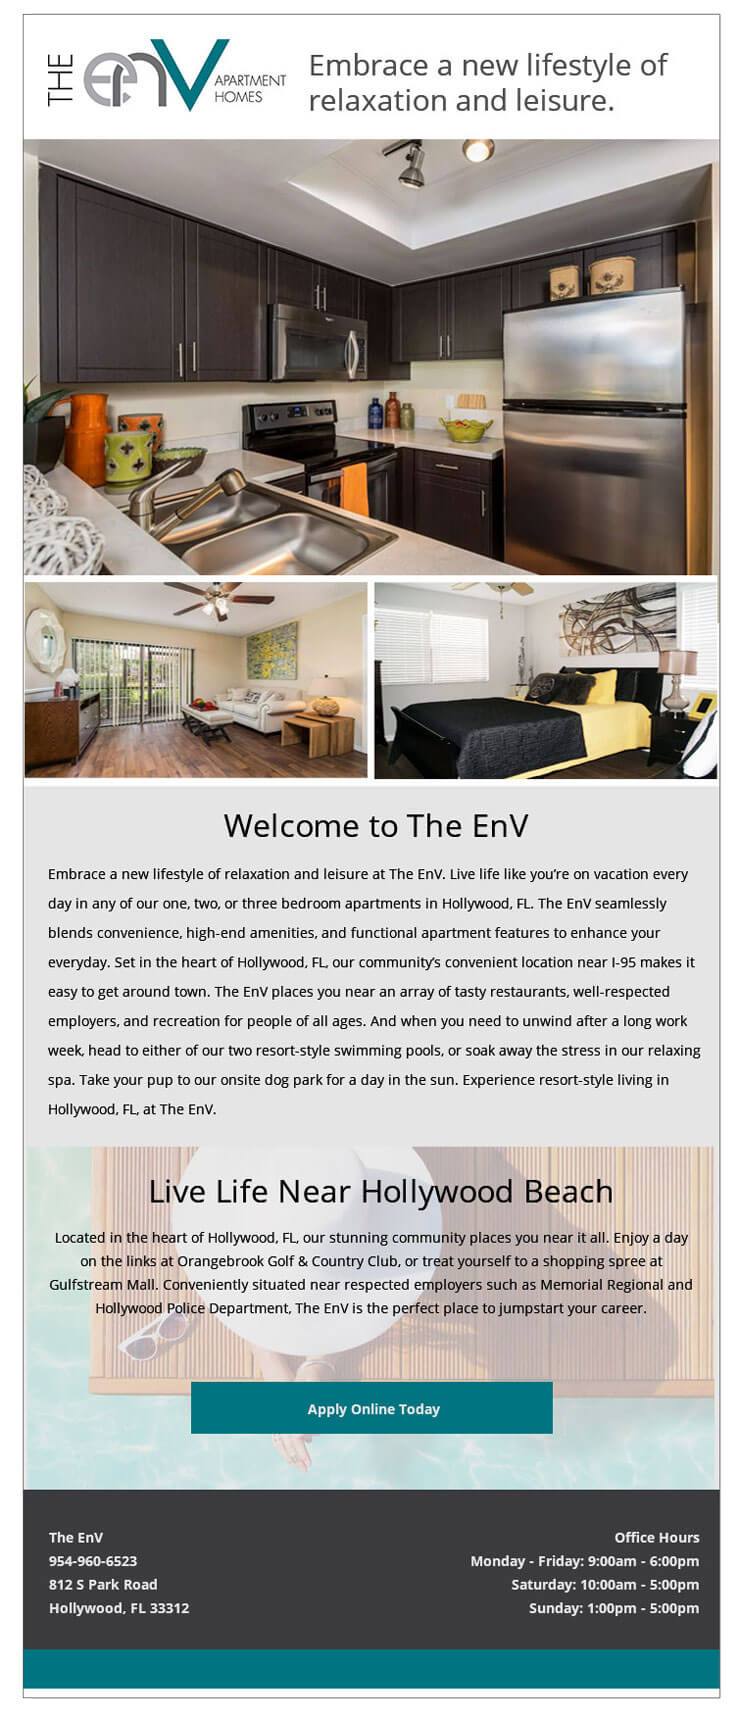 The enV Apartment Homes